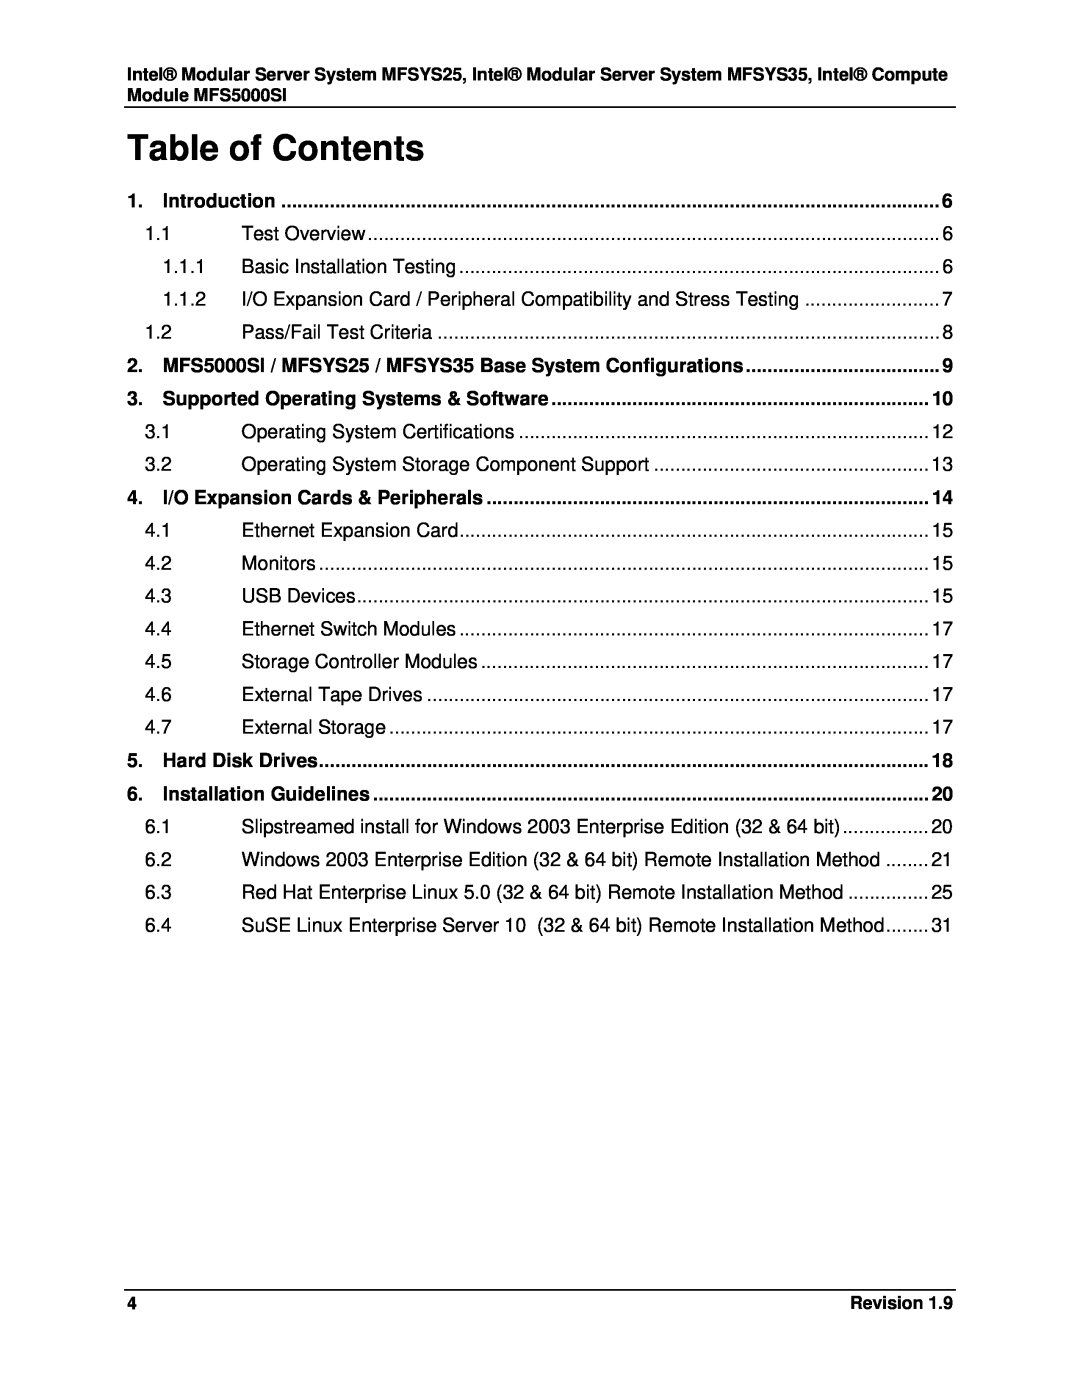 Intel MFS5000SI, MFSYS25, MFSYS35 manual Table of Contents 